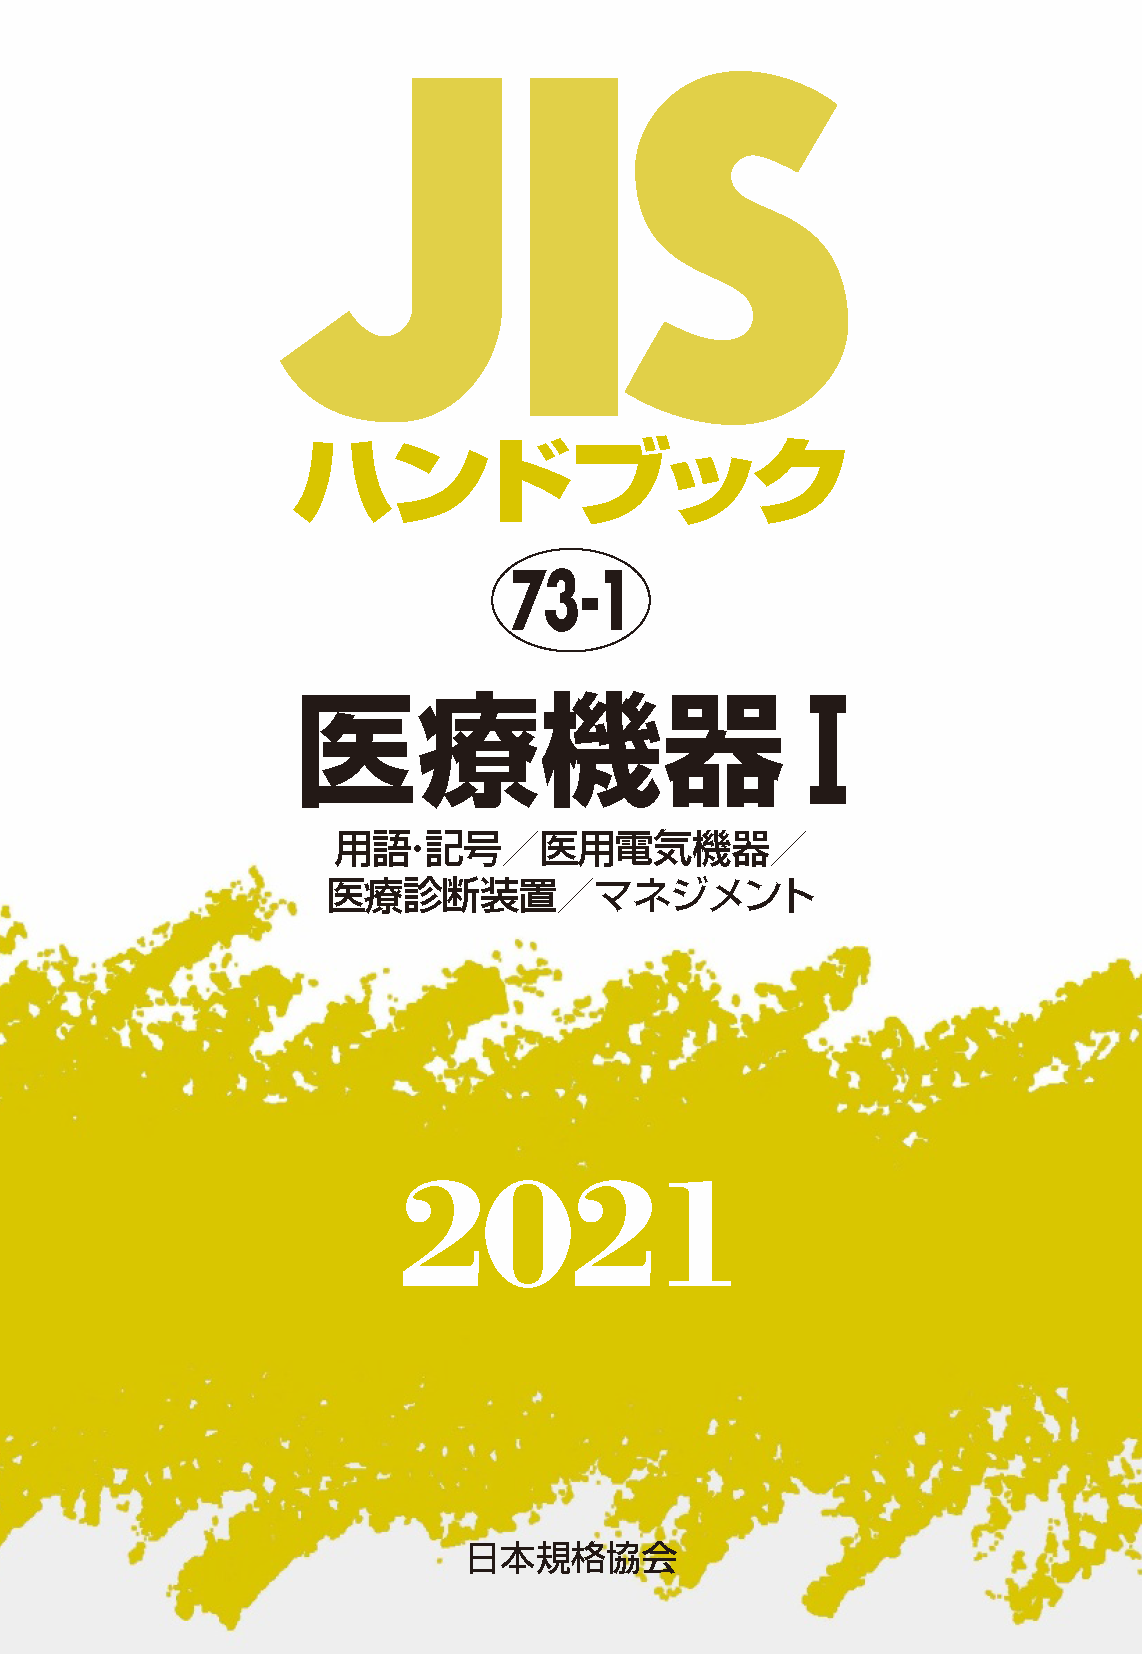 JIS HB 73-1 医療機器 I 2021 | 日本規格協会 JSA Group Webdesk